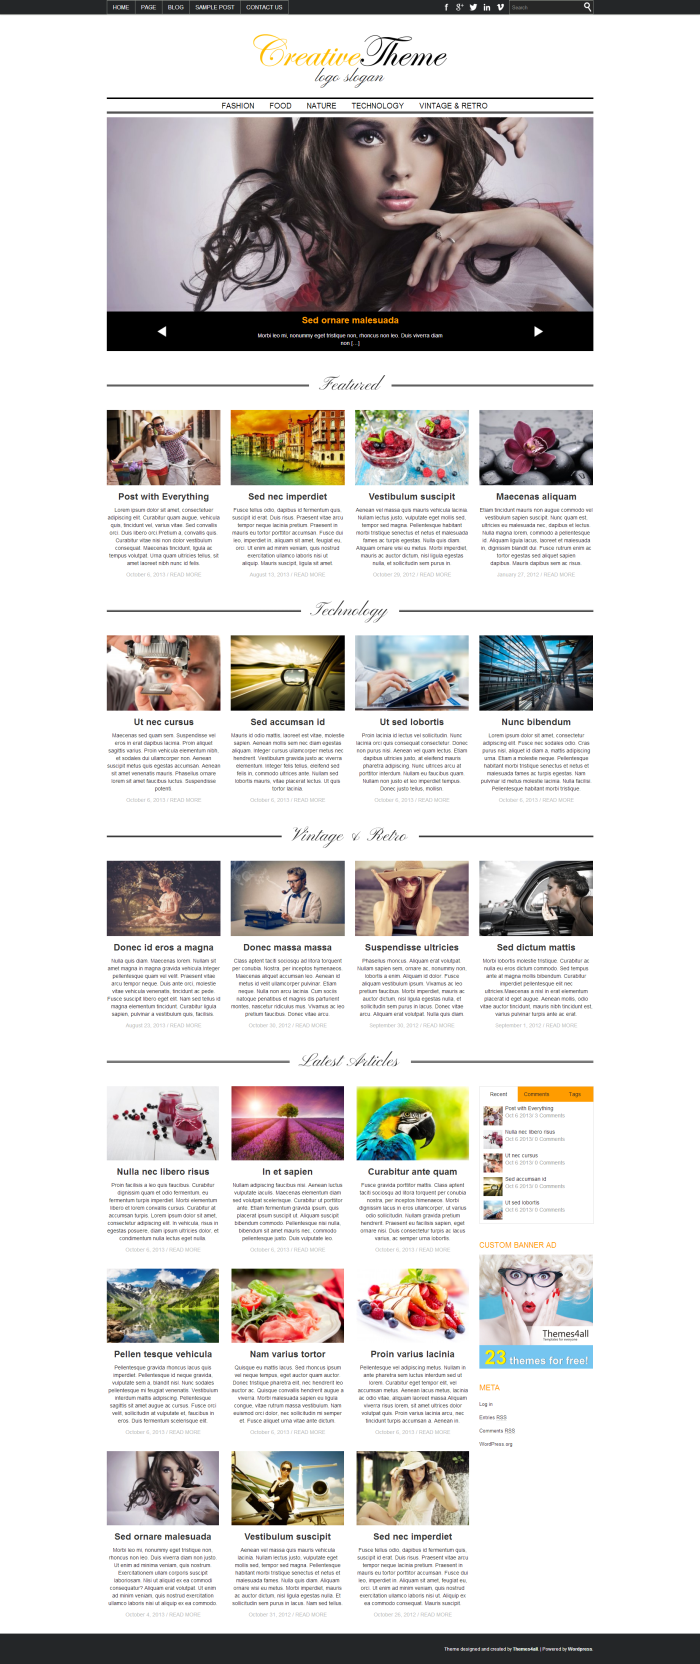 Creative WordPress Theme - Ecommerce|Magazine